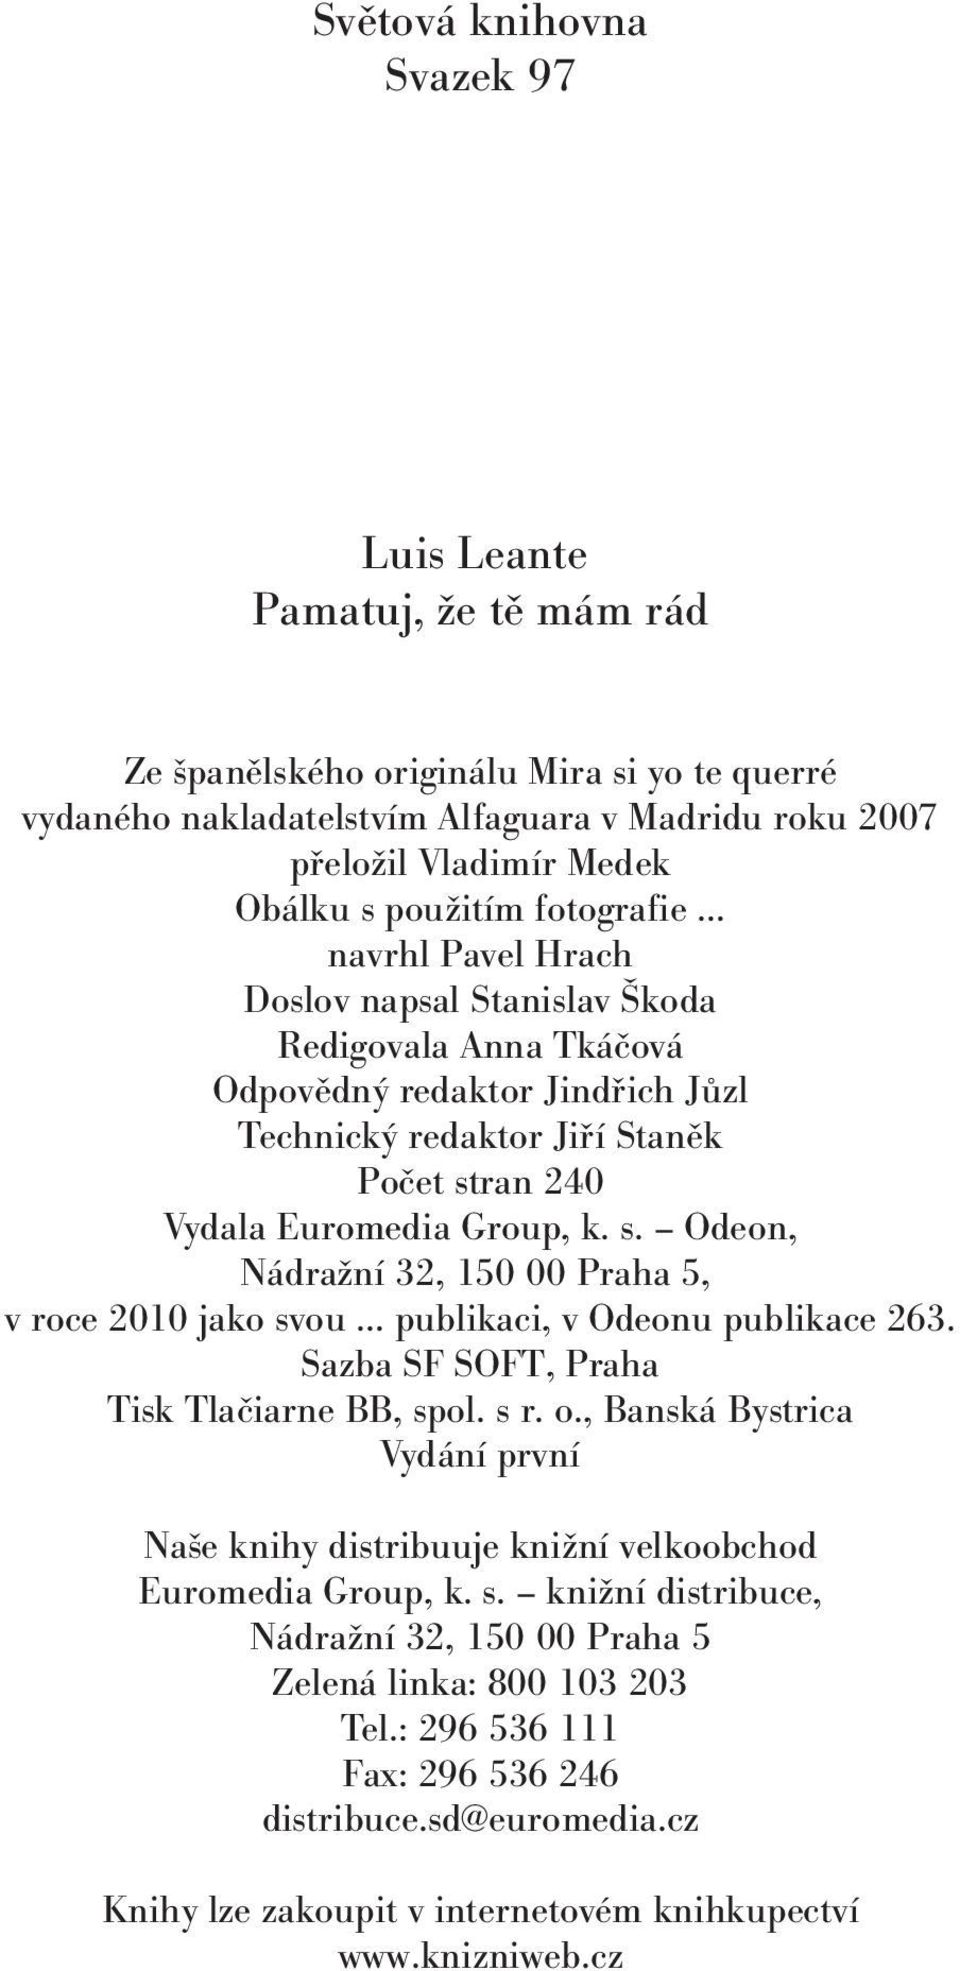 s. Odeon, Nádražní 32, 150 00 Praha 5, v roce 2010 jako svou publikaci, v Odeonu publikace 263. Sazba SF SOFT, Praha Tisk Tlačiarne BB, spol. s r. o.